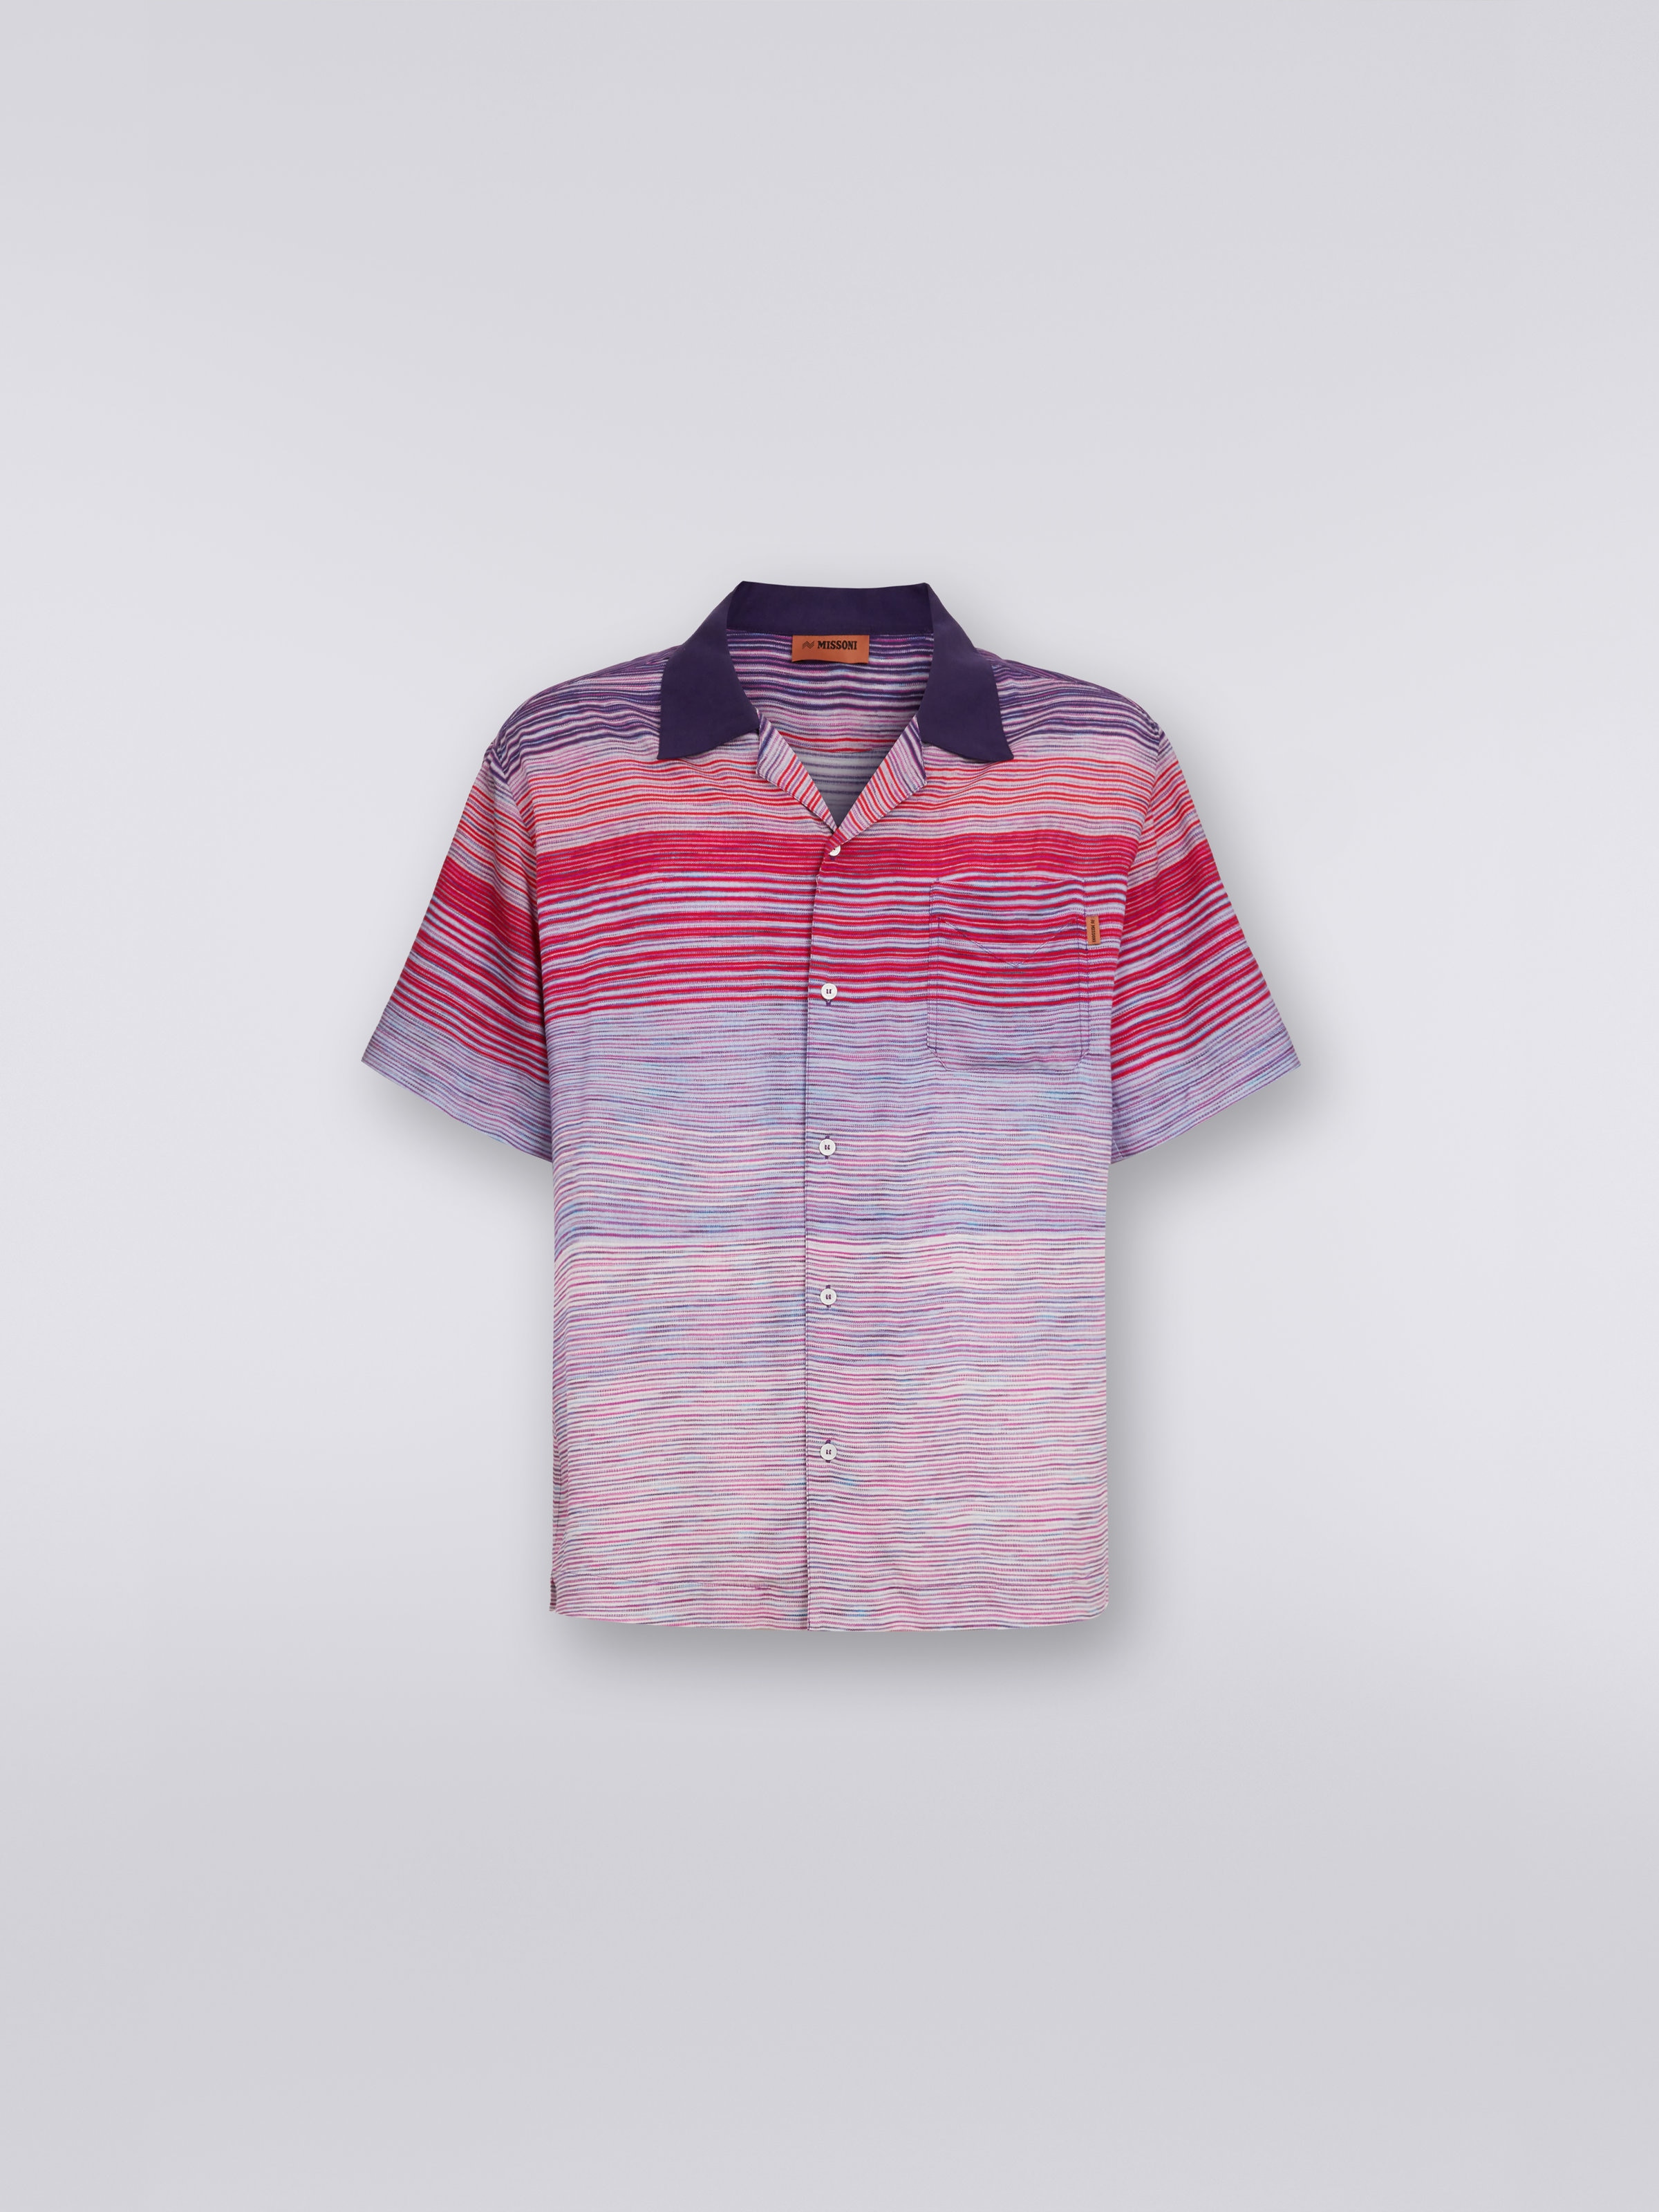 Kurzärmeliges Baumwollhemd im Bowling-Stil, Rot, Violett & Hellblau - 0